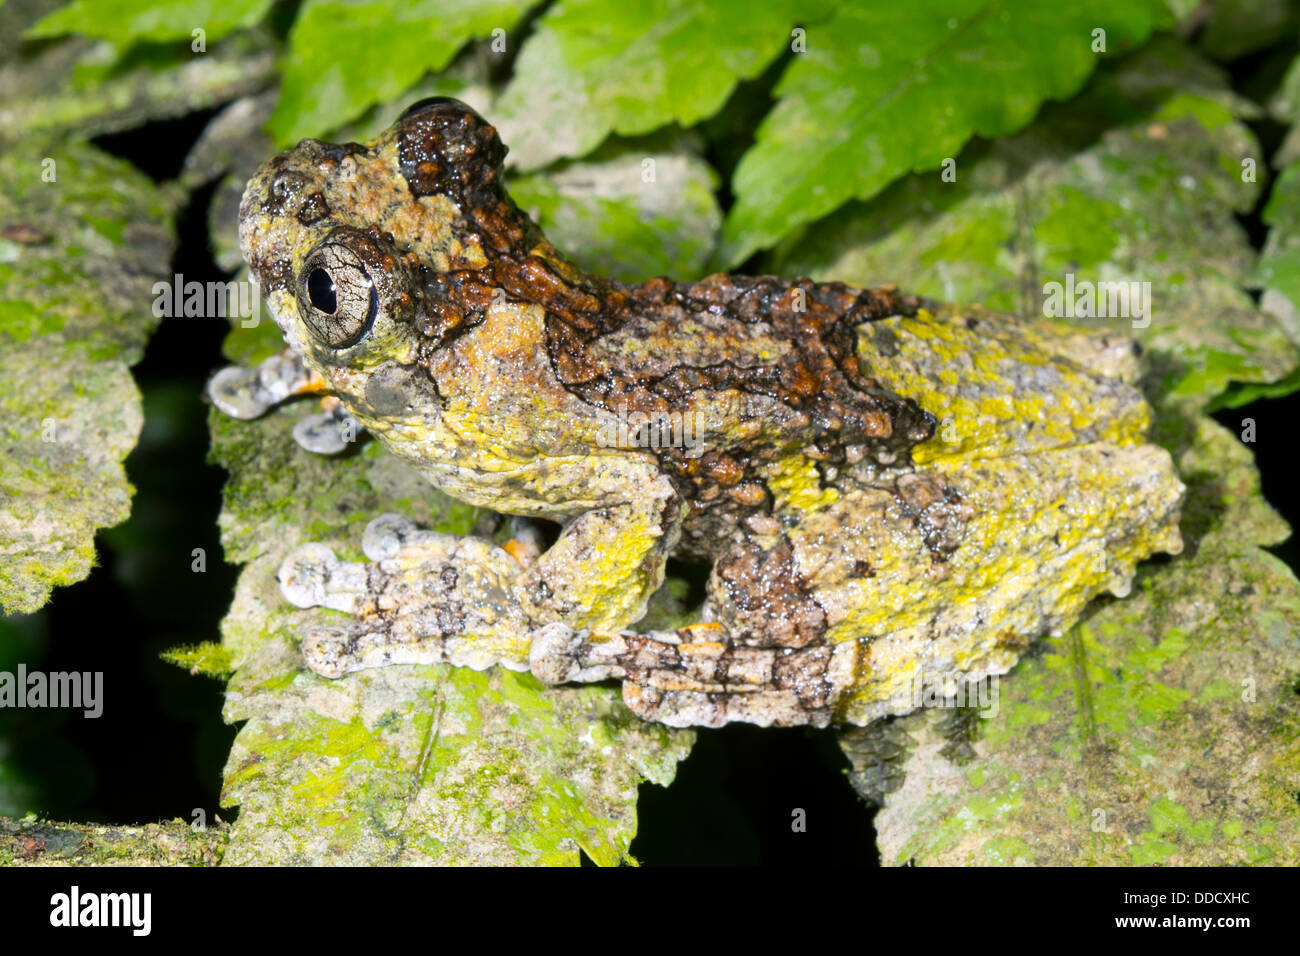 Neotropical treefrogs in marmo (Dendropsophus marmoratus) su una foglia della foresta pluviale, Ecuador Foto Stock